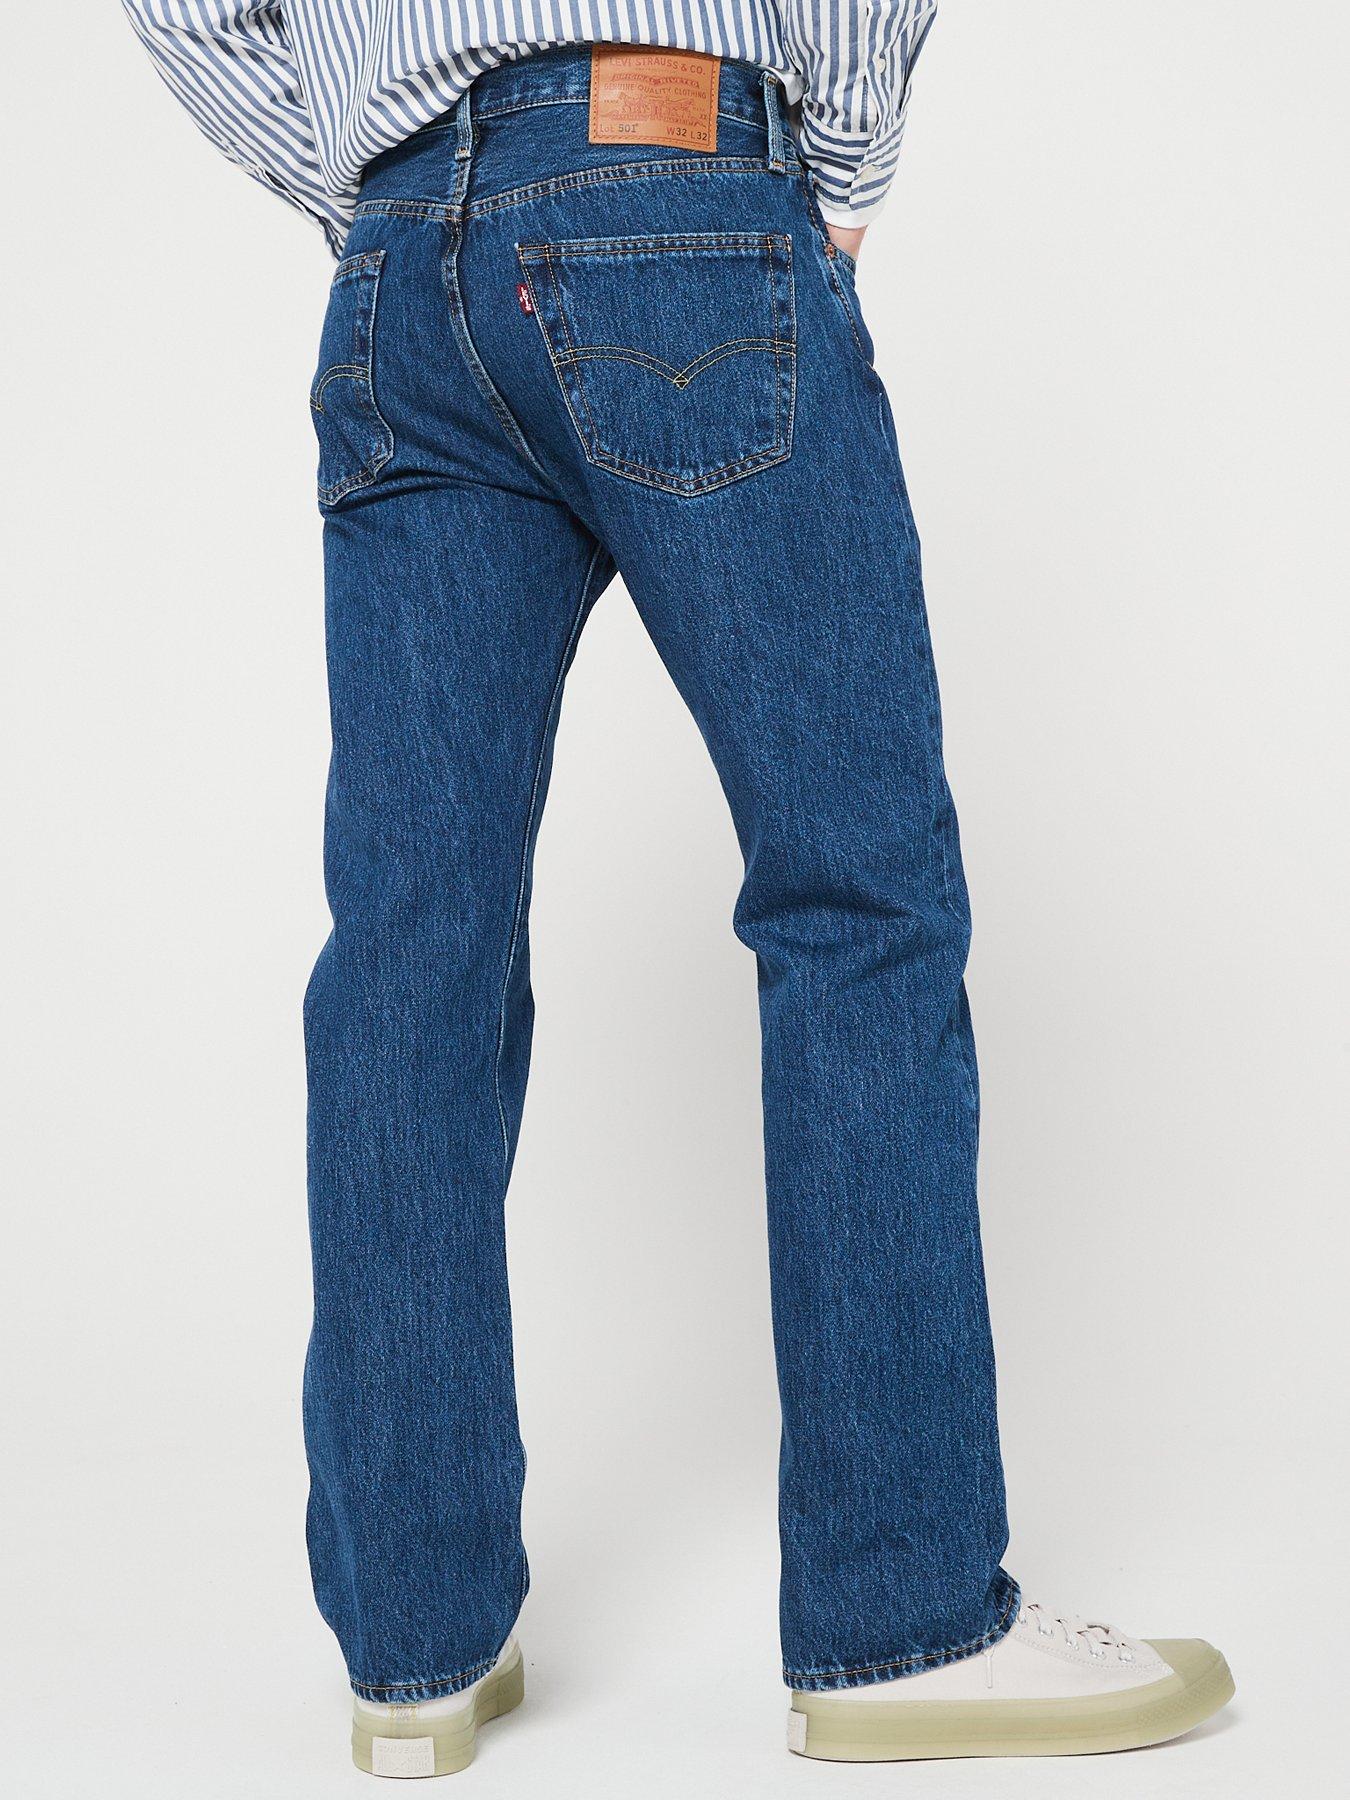 Levi's 501 Original Straight Fit Jeans - Mid Wash 